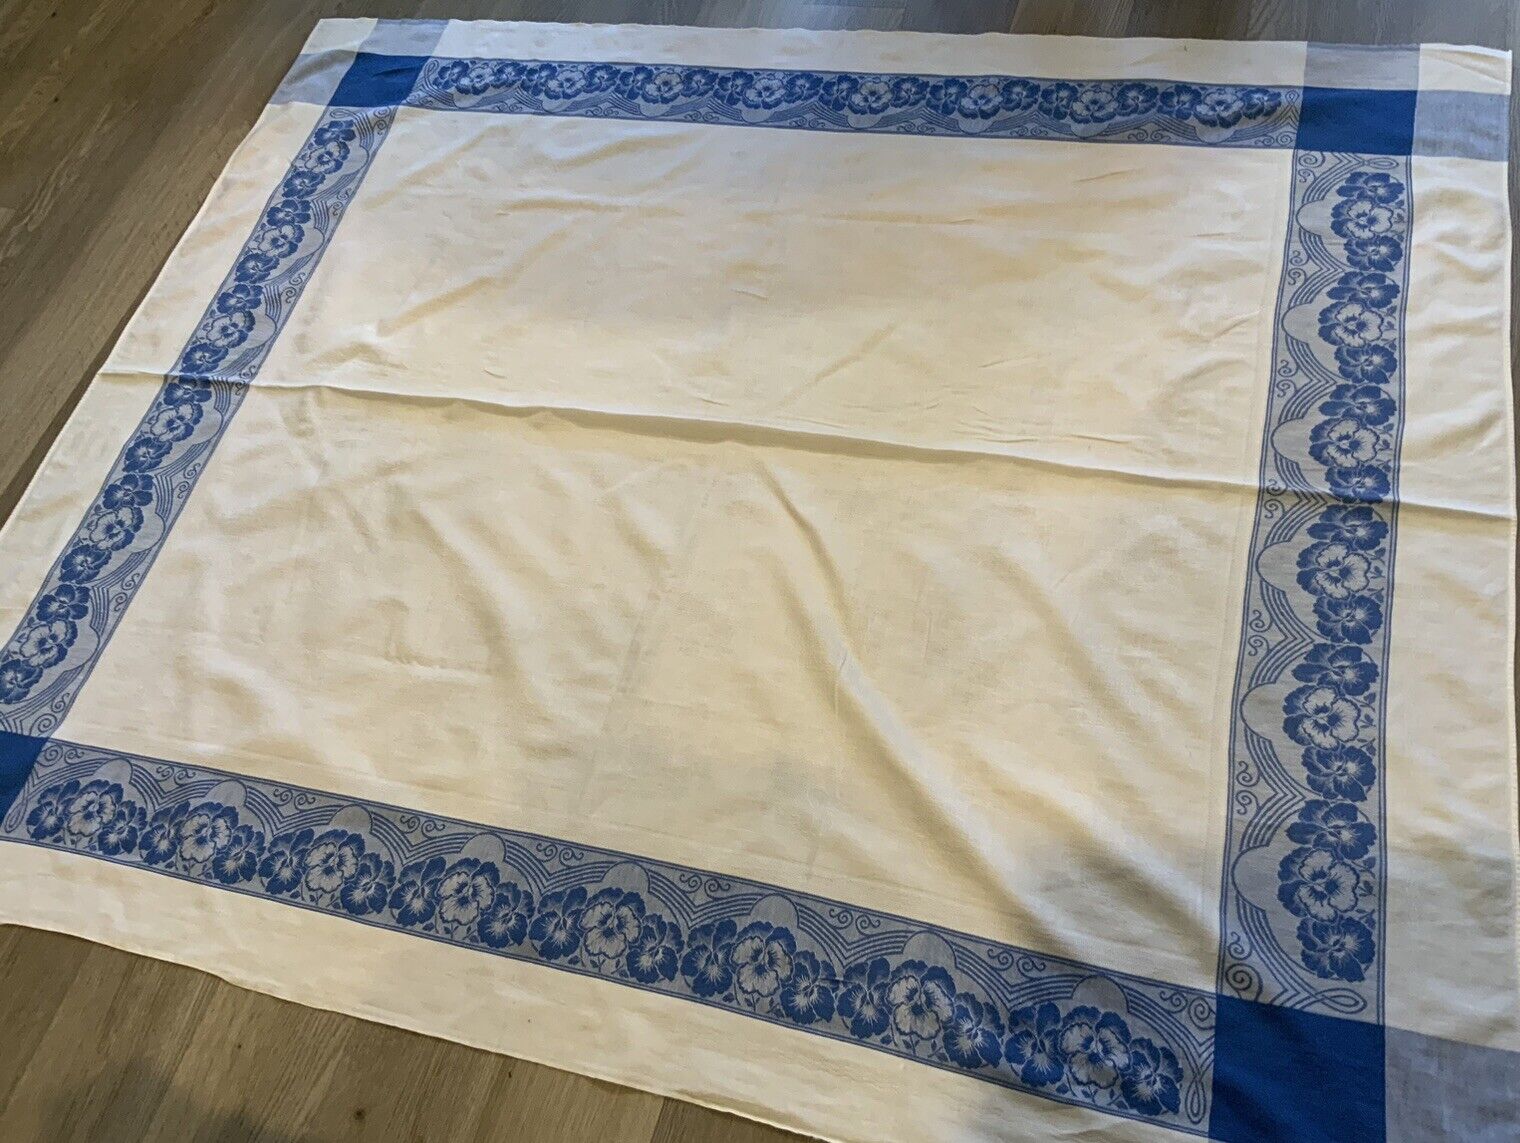 Large Vintage Rectangle Tablecloth, Woven Flower Design, Blue & White, Cotton